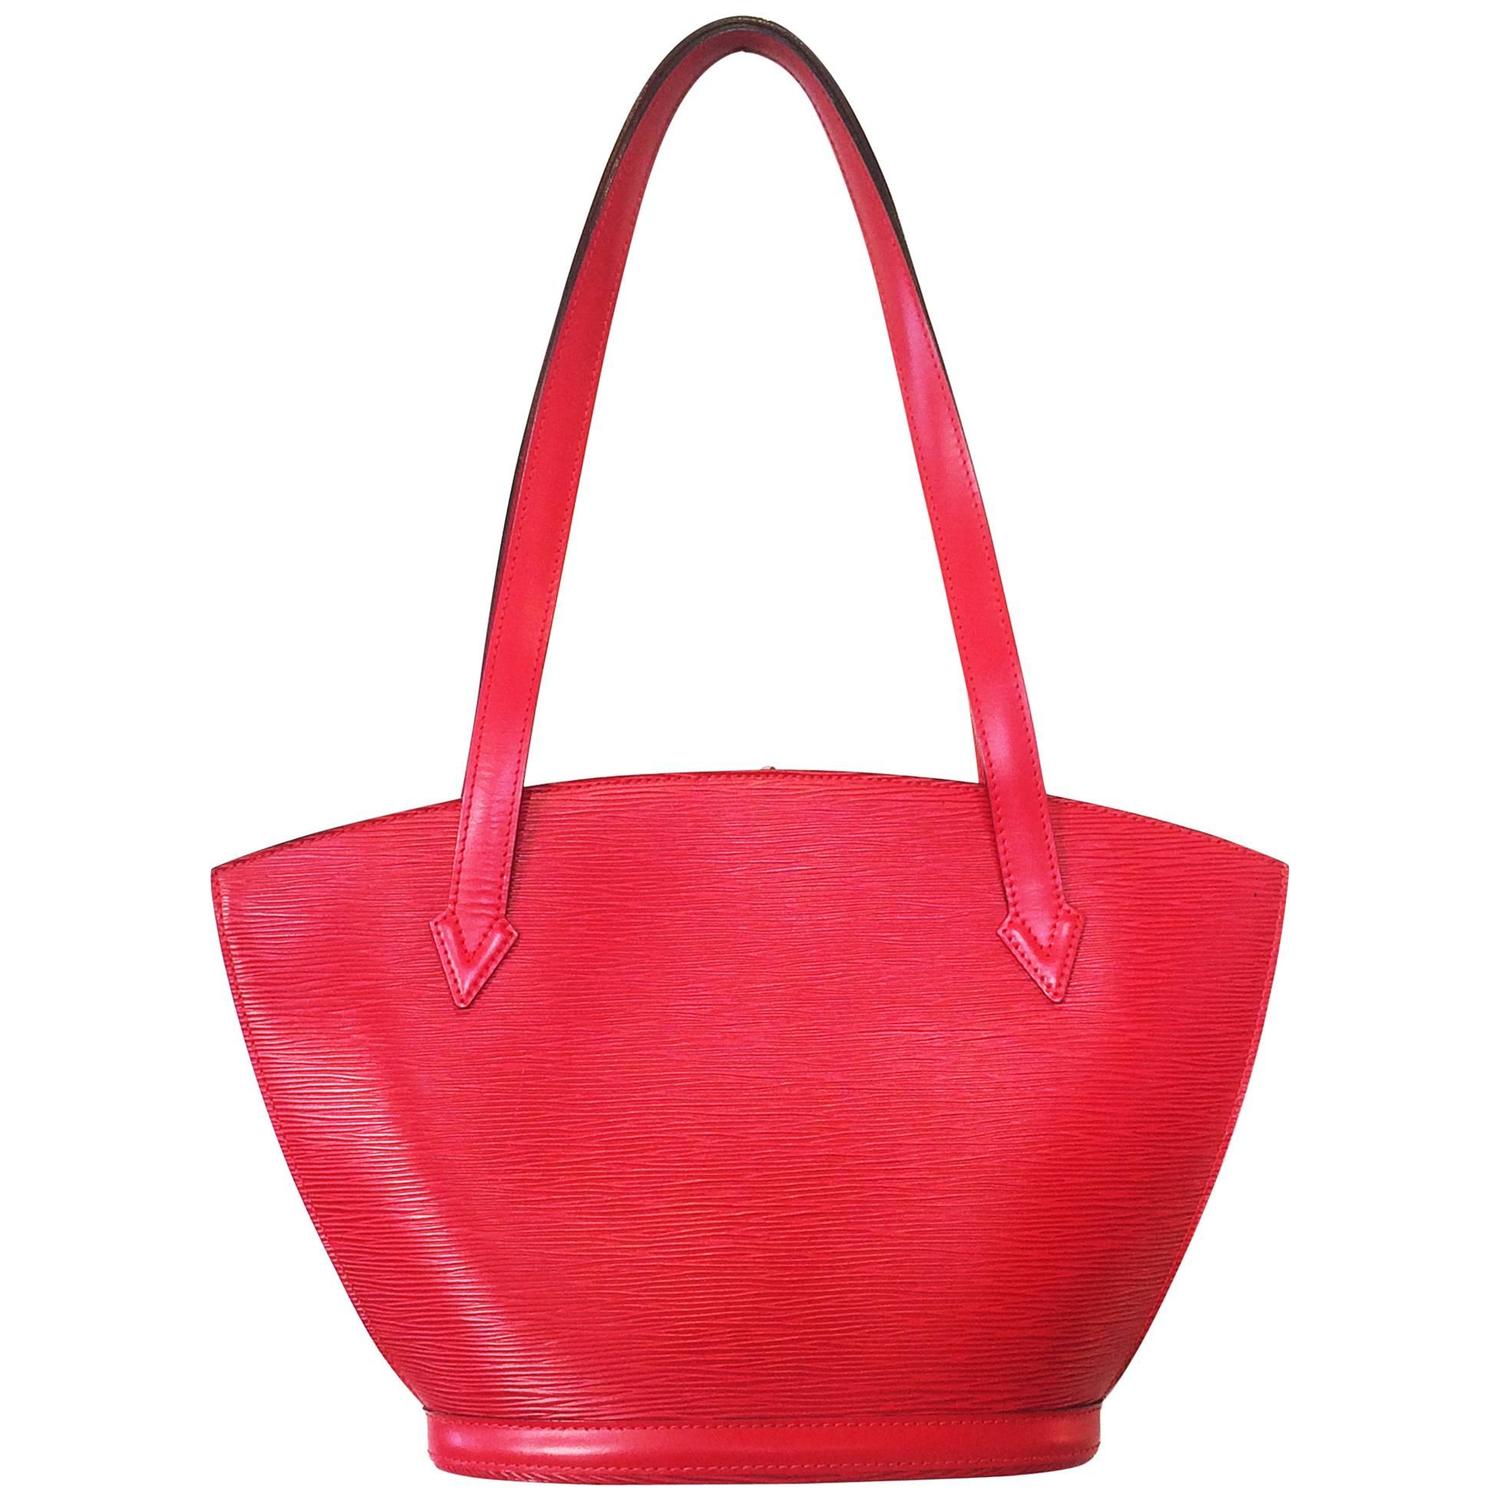 Red EPI Leather St. Jacques Louis Vuitton handbag bag purse For Sale at 1stdibs